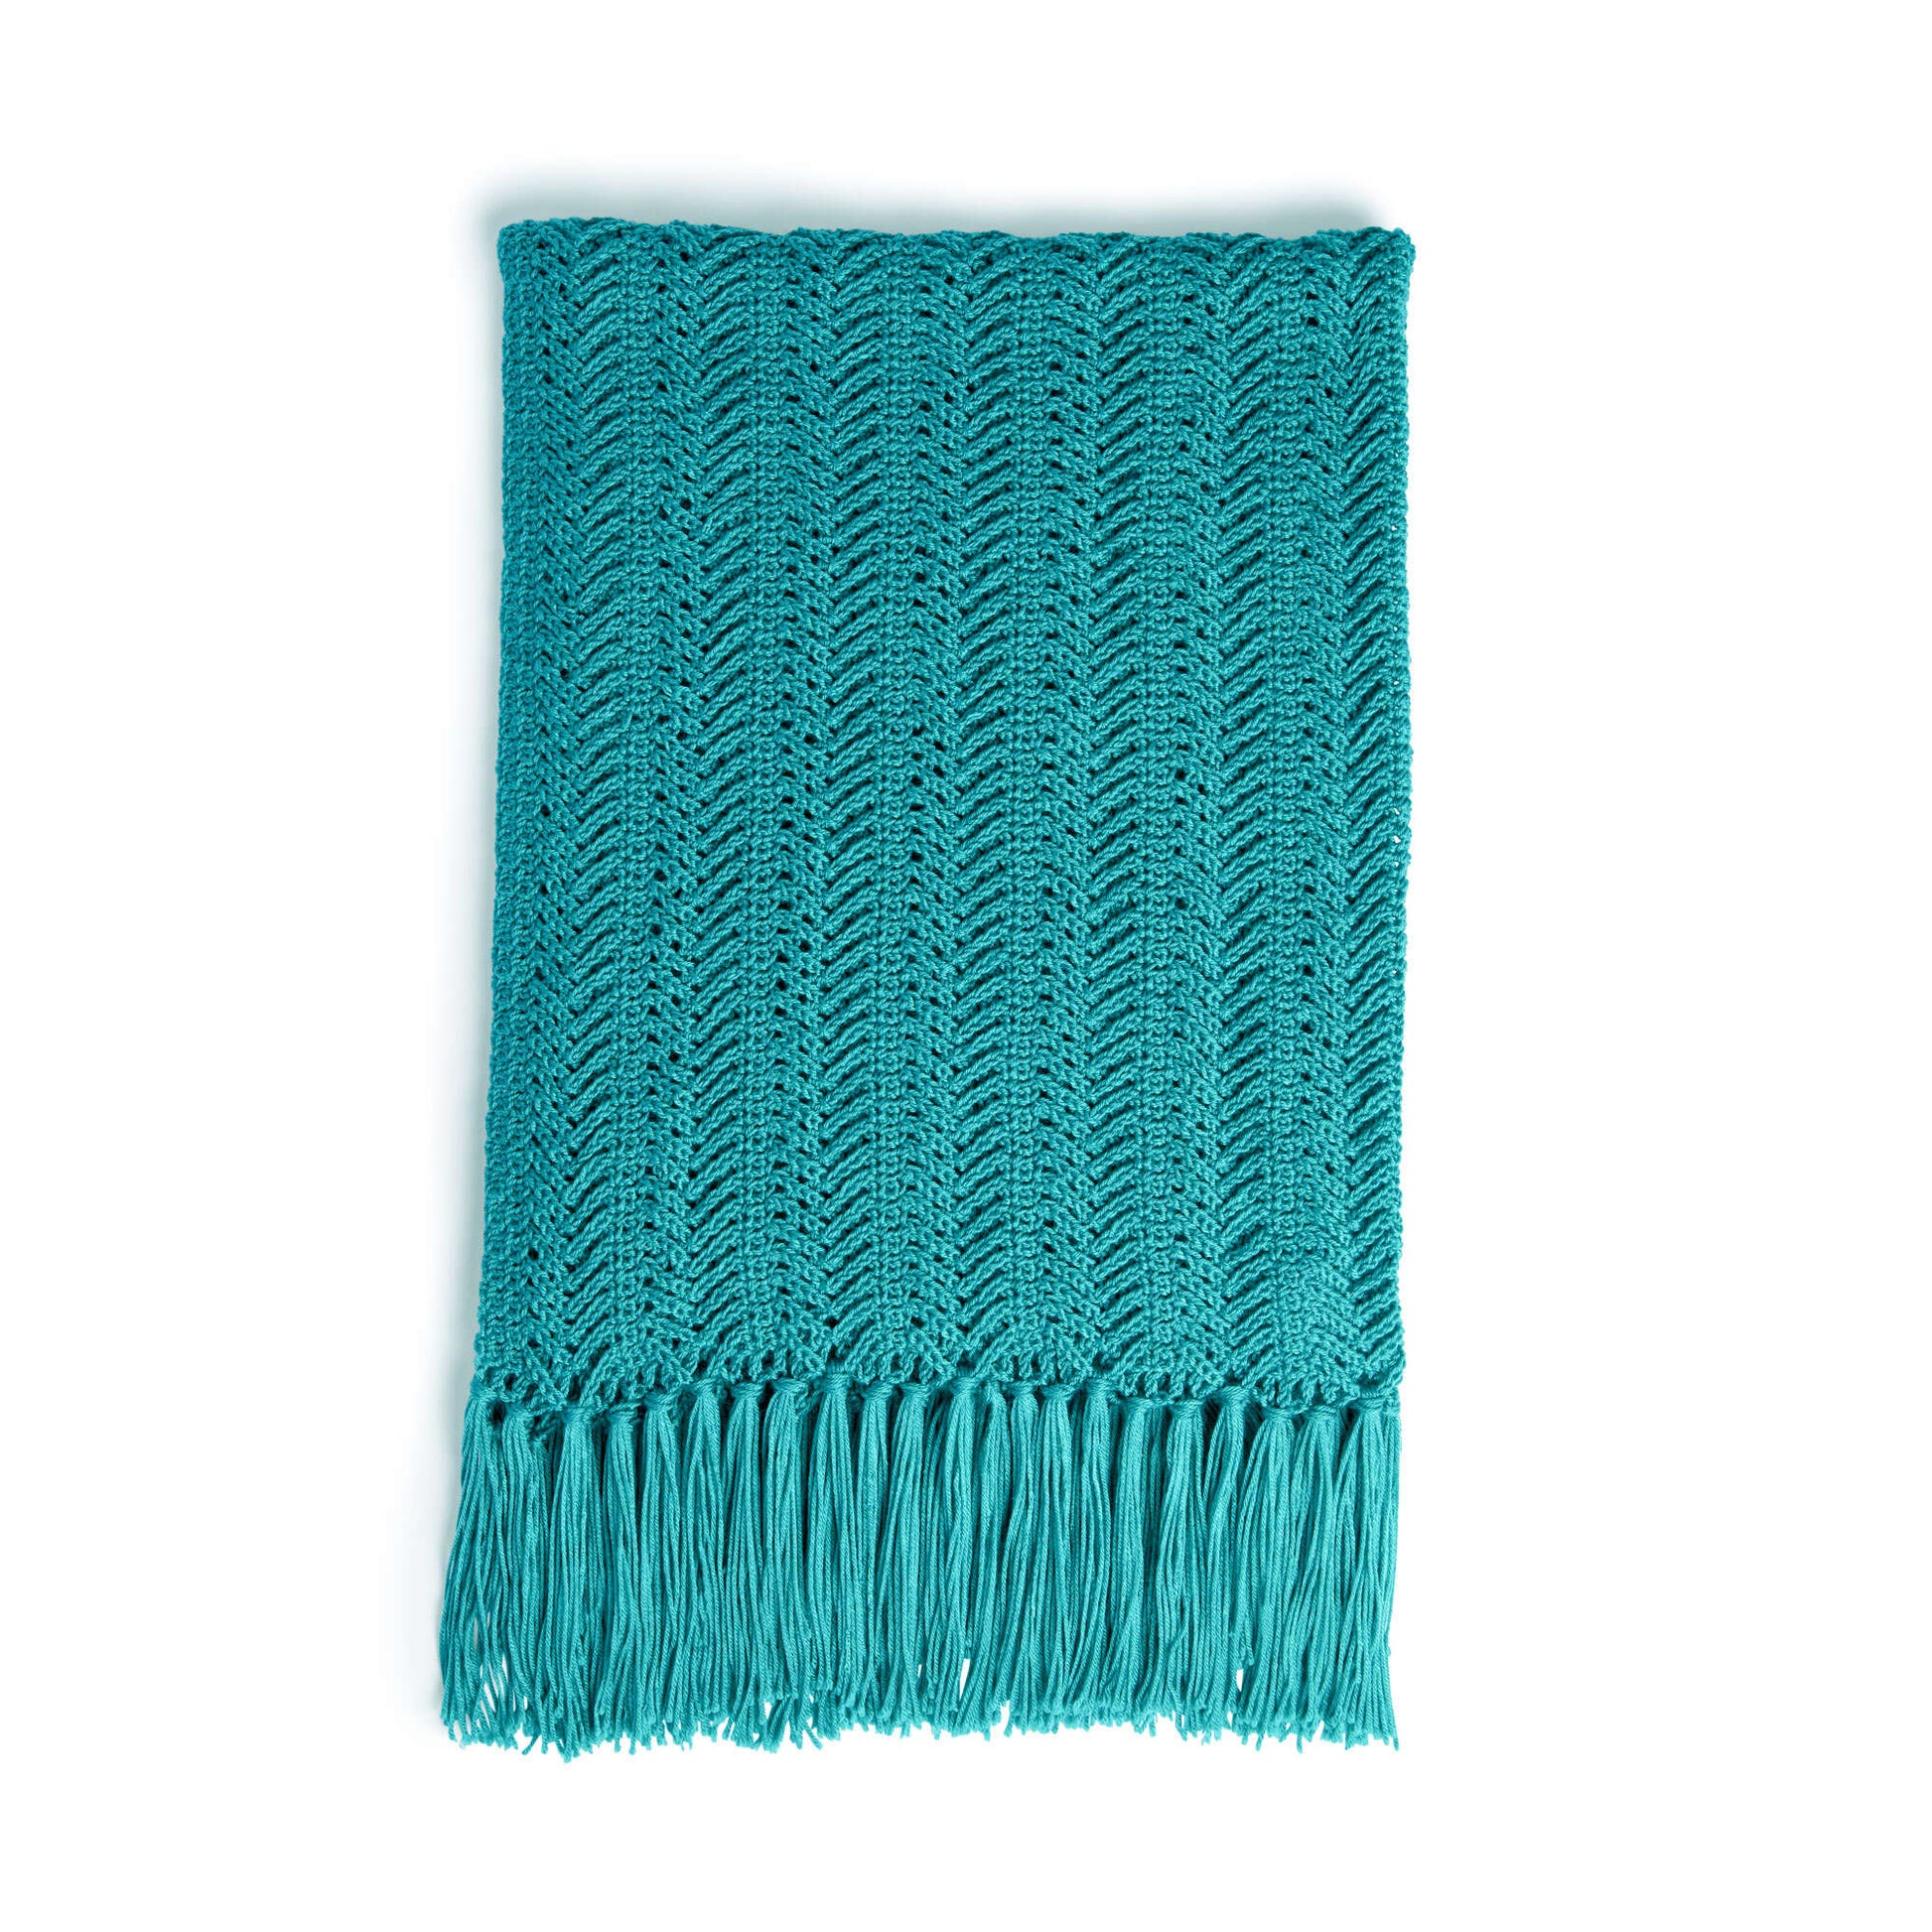 Free Caron Vertical Herringbone Crochet Blanket Pattern